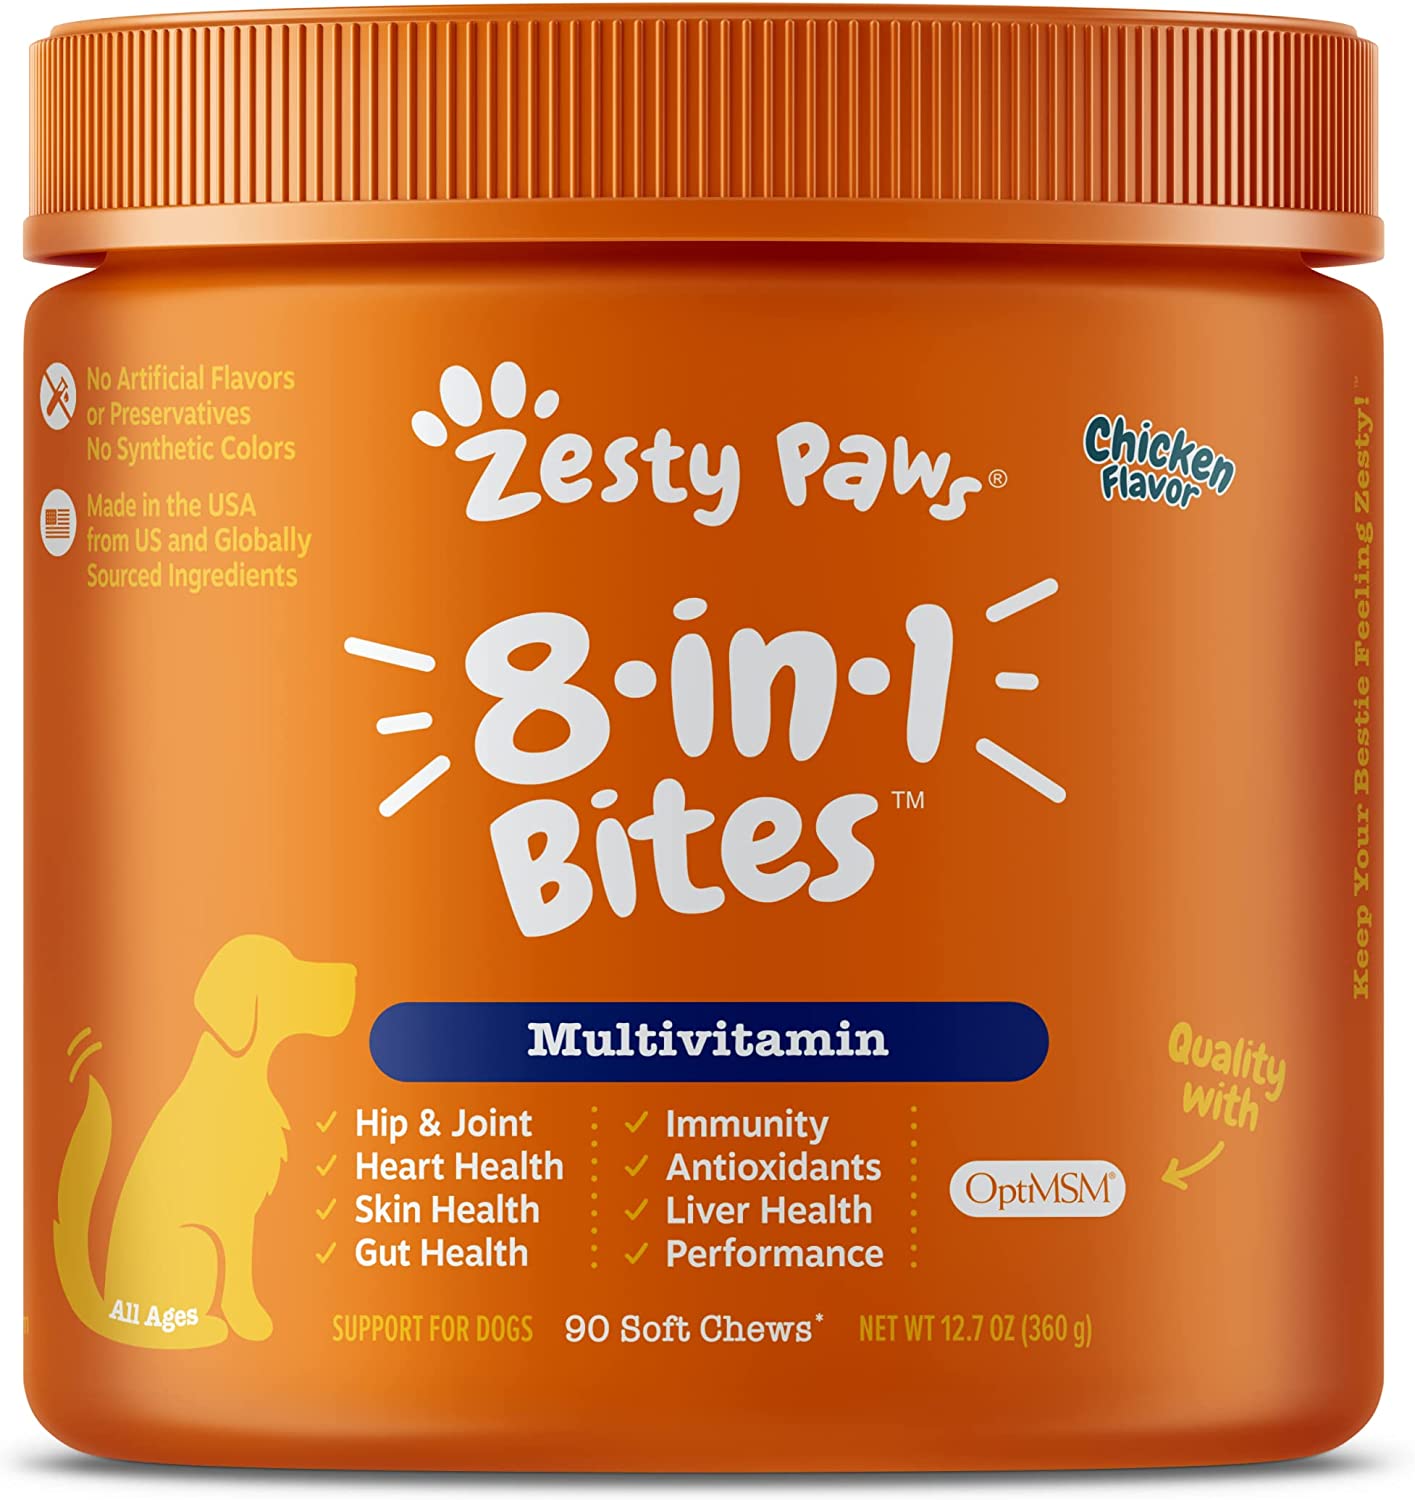 Zesty Paws 8 In 1 Bites Suplemento Para Perros Multi-vitaminas 90 Soft Chews